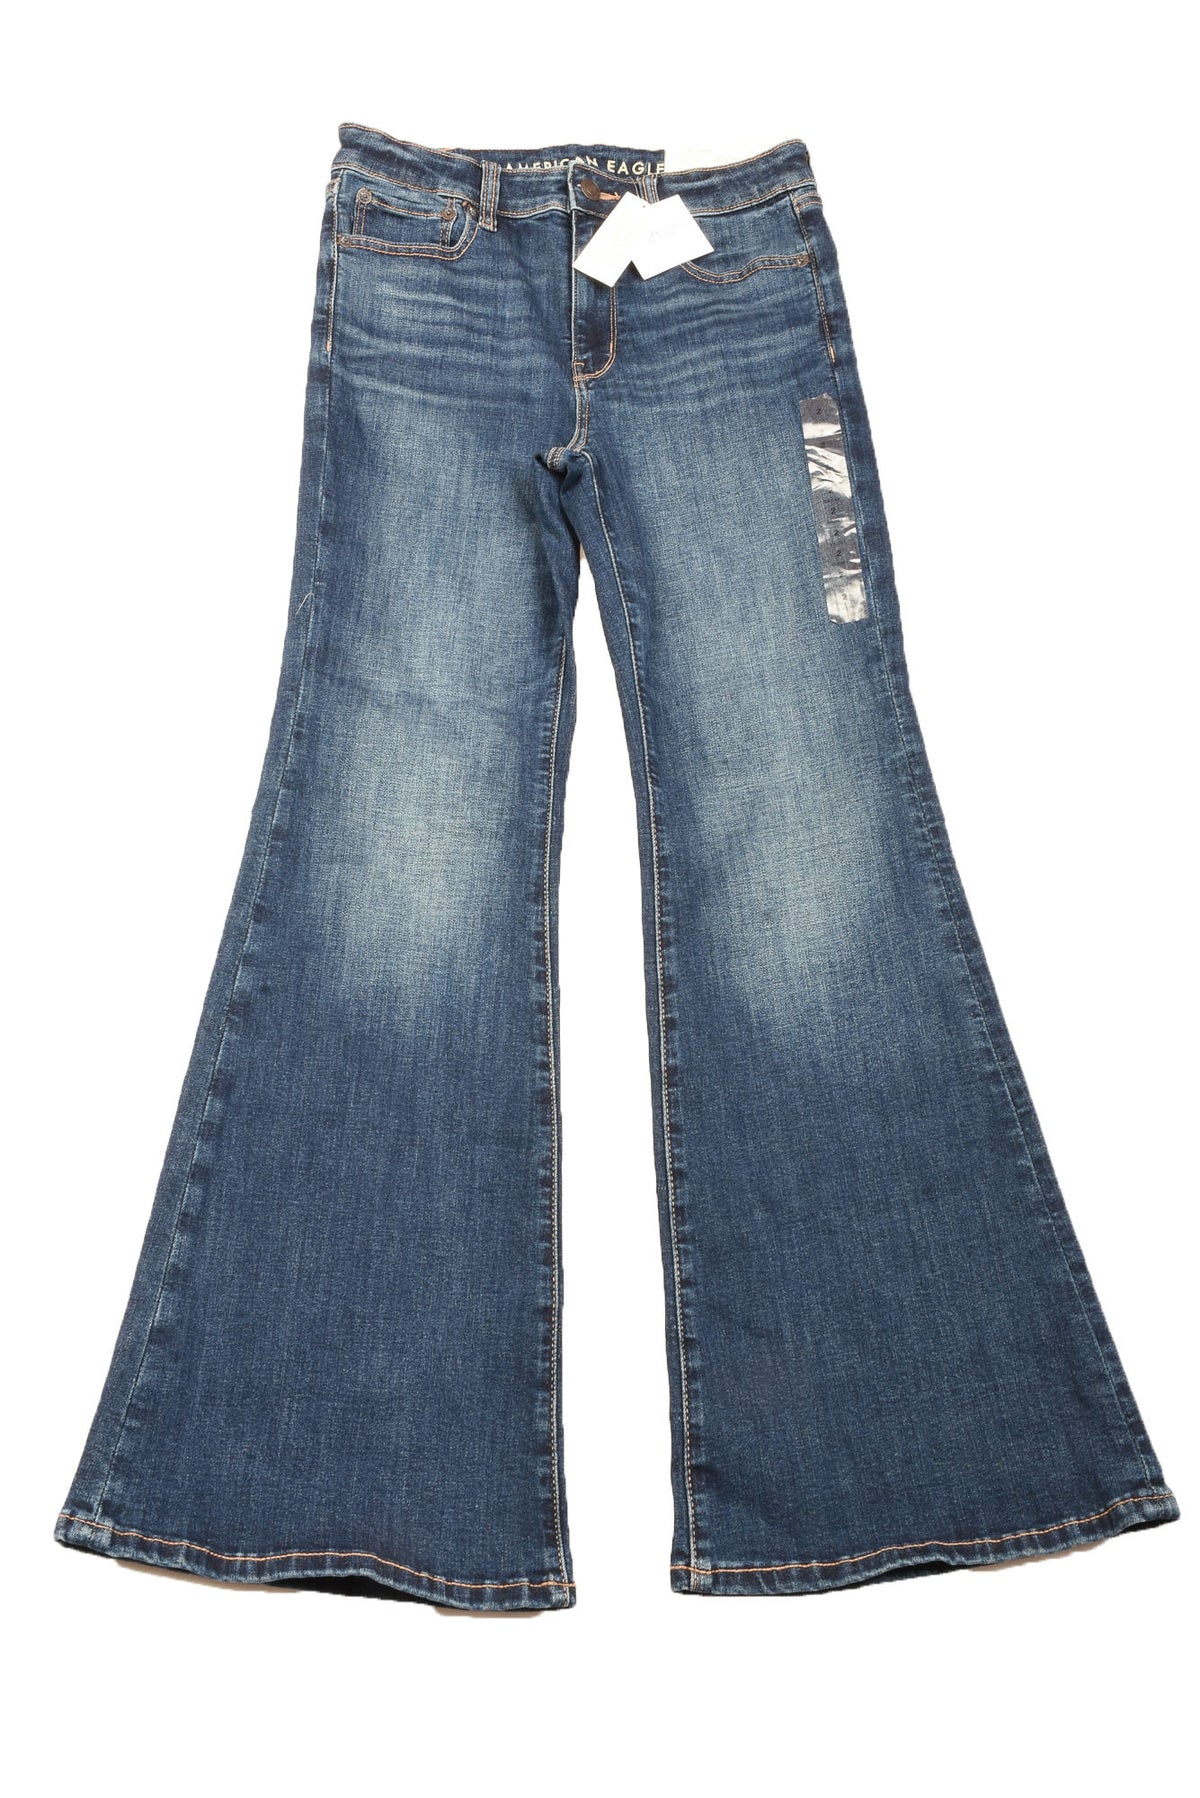 American Eagle Size 2 Short Women&#39;s Jeans